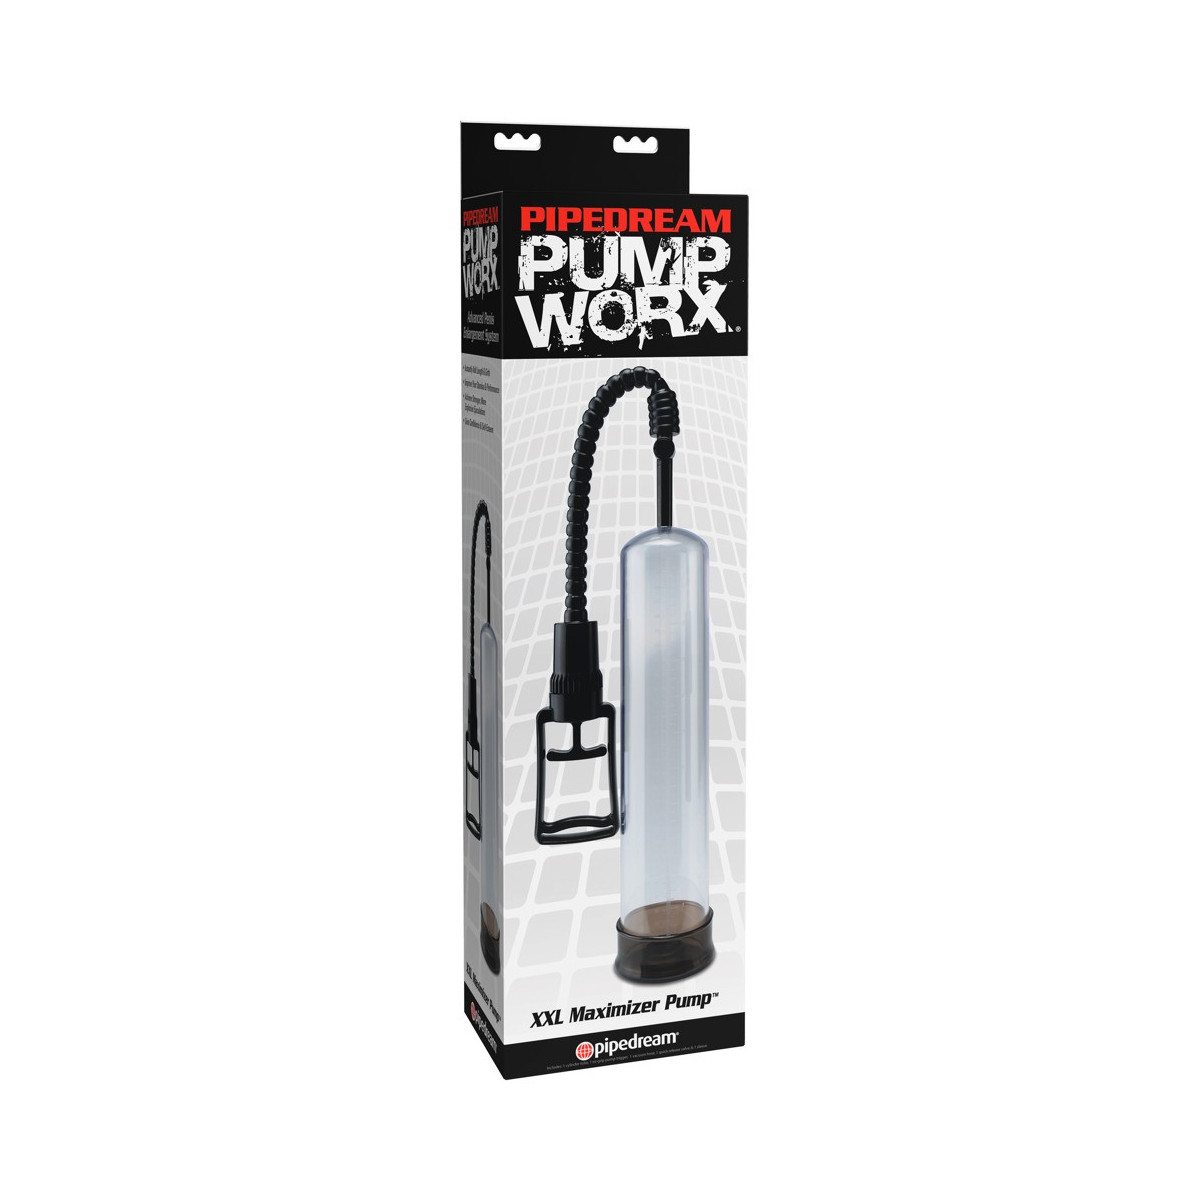 Pump Worx Beginner's Power Pump - Pompa per il Pene, Valvola di